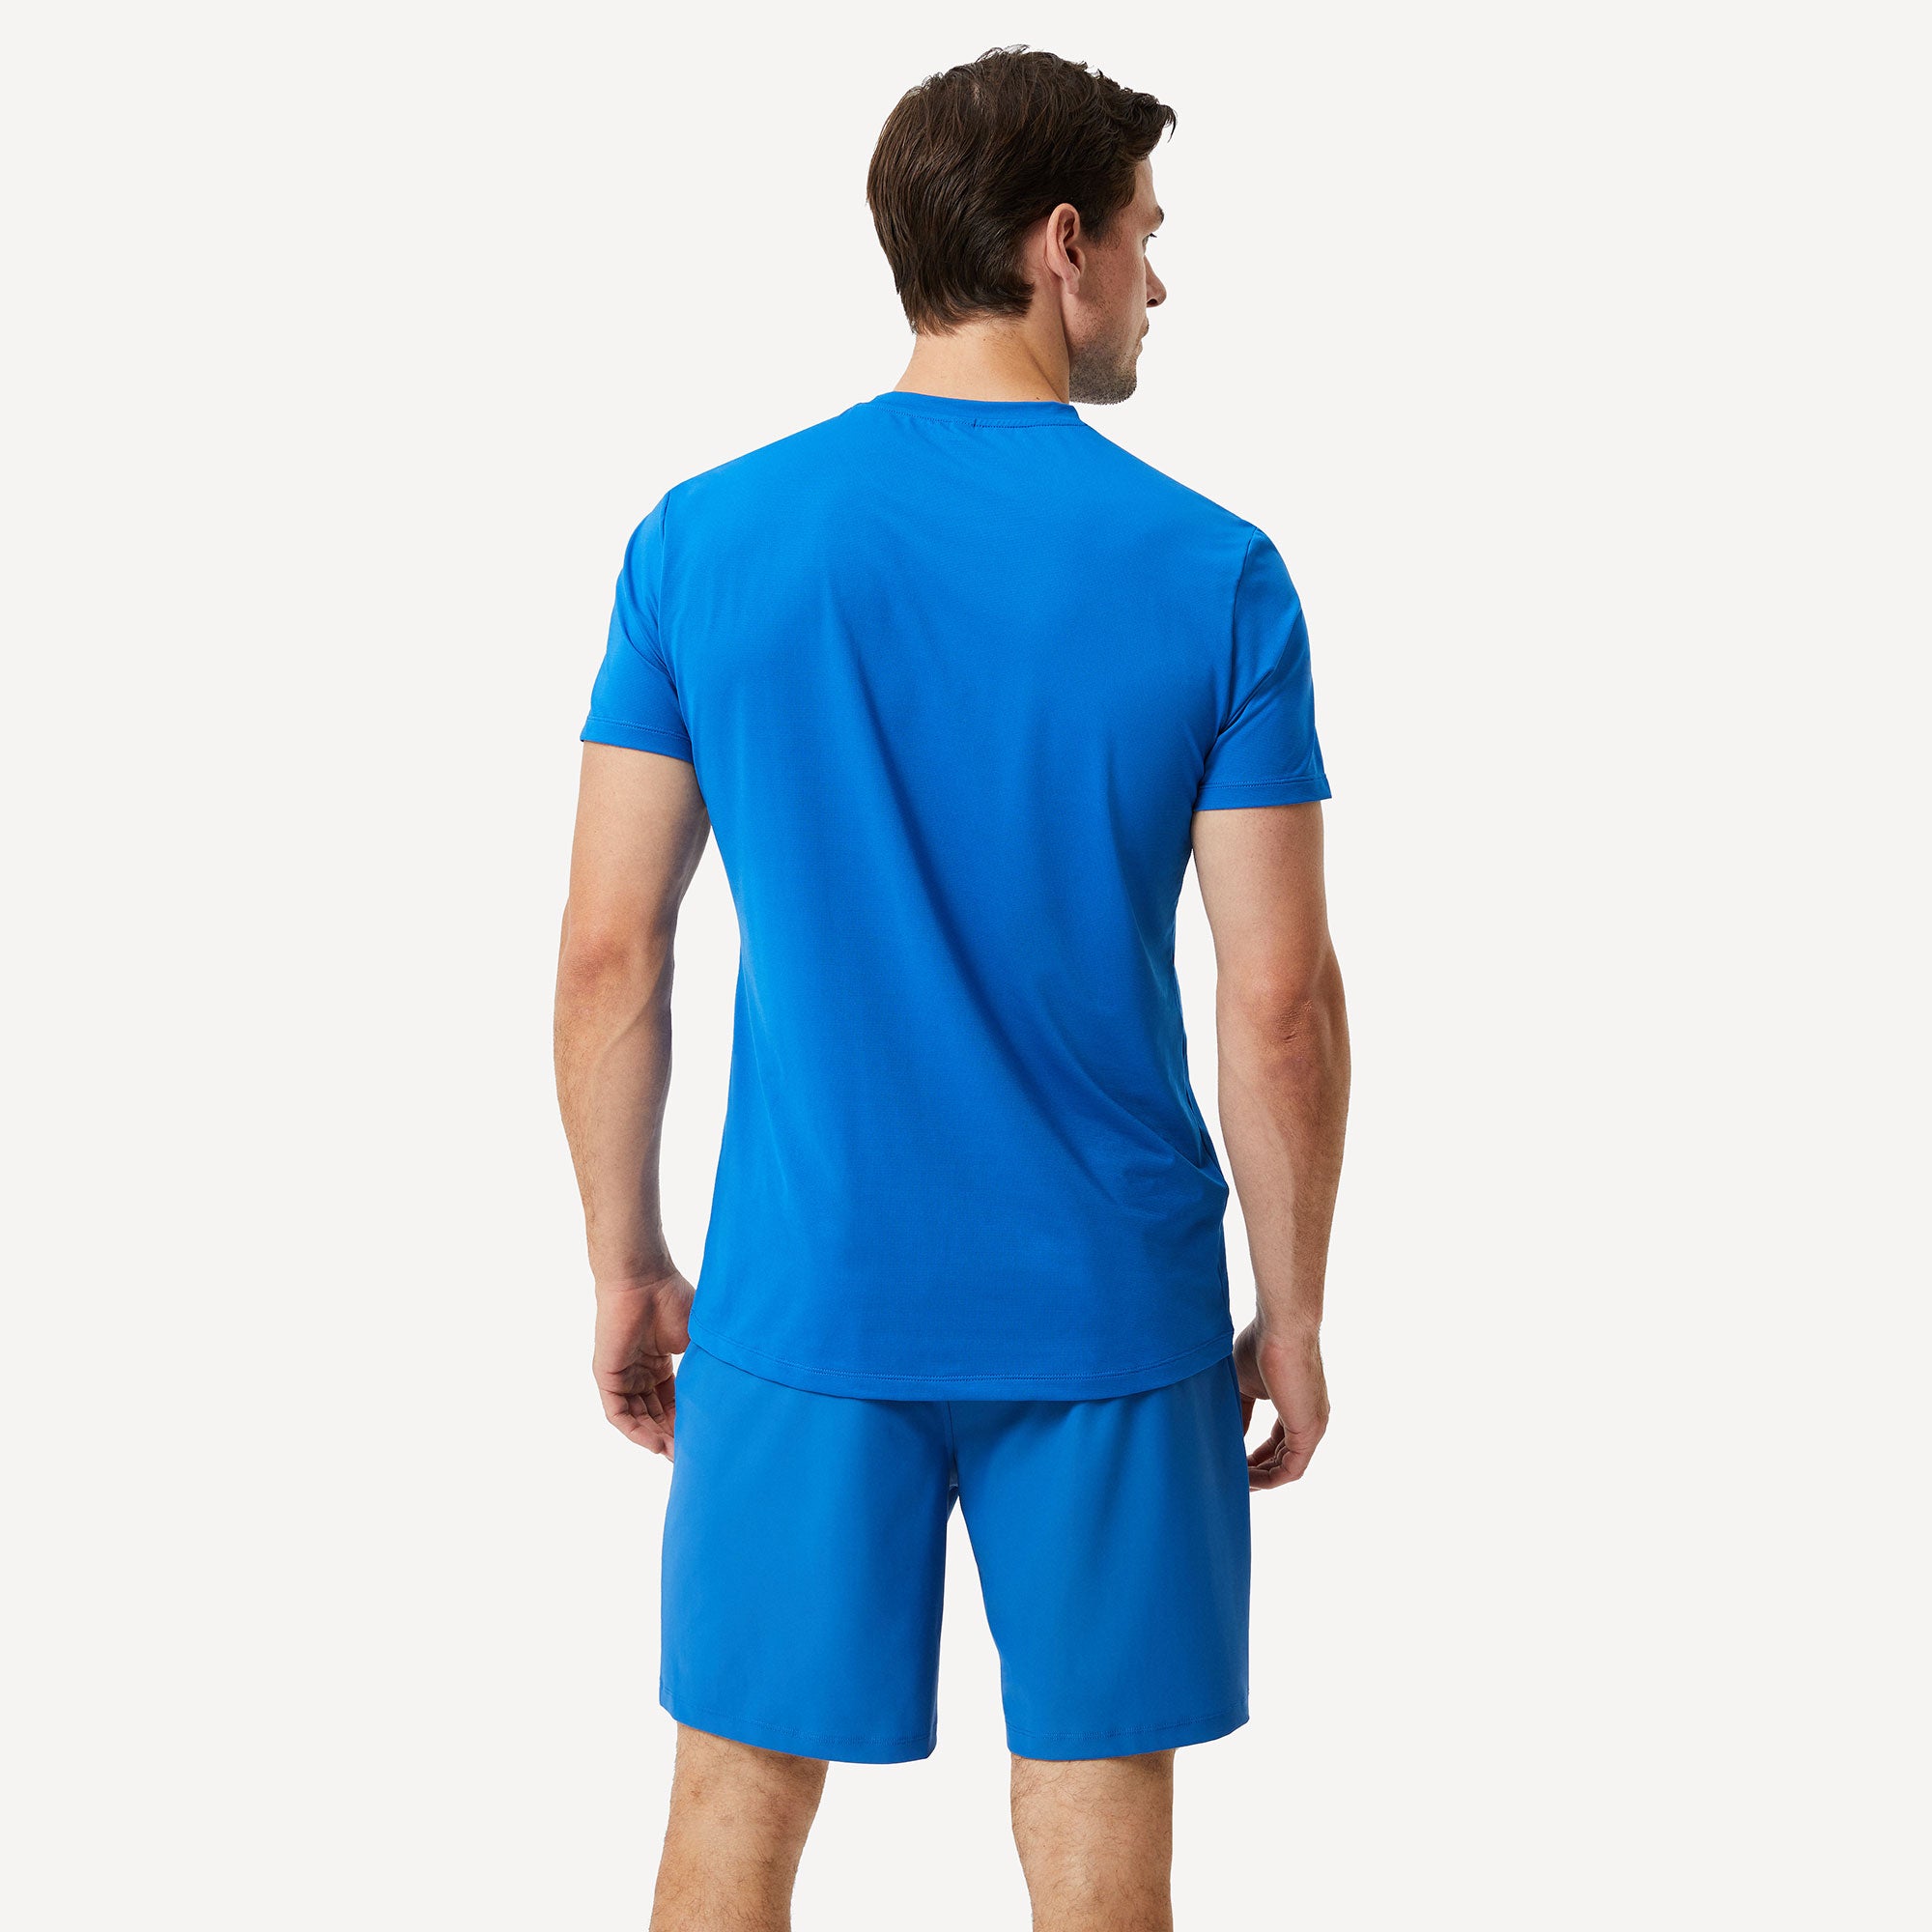 Björn Borg Ace Men's Light Tennis Shirt - Blue (2)